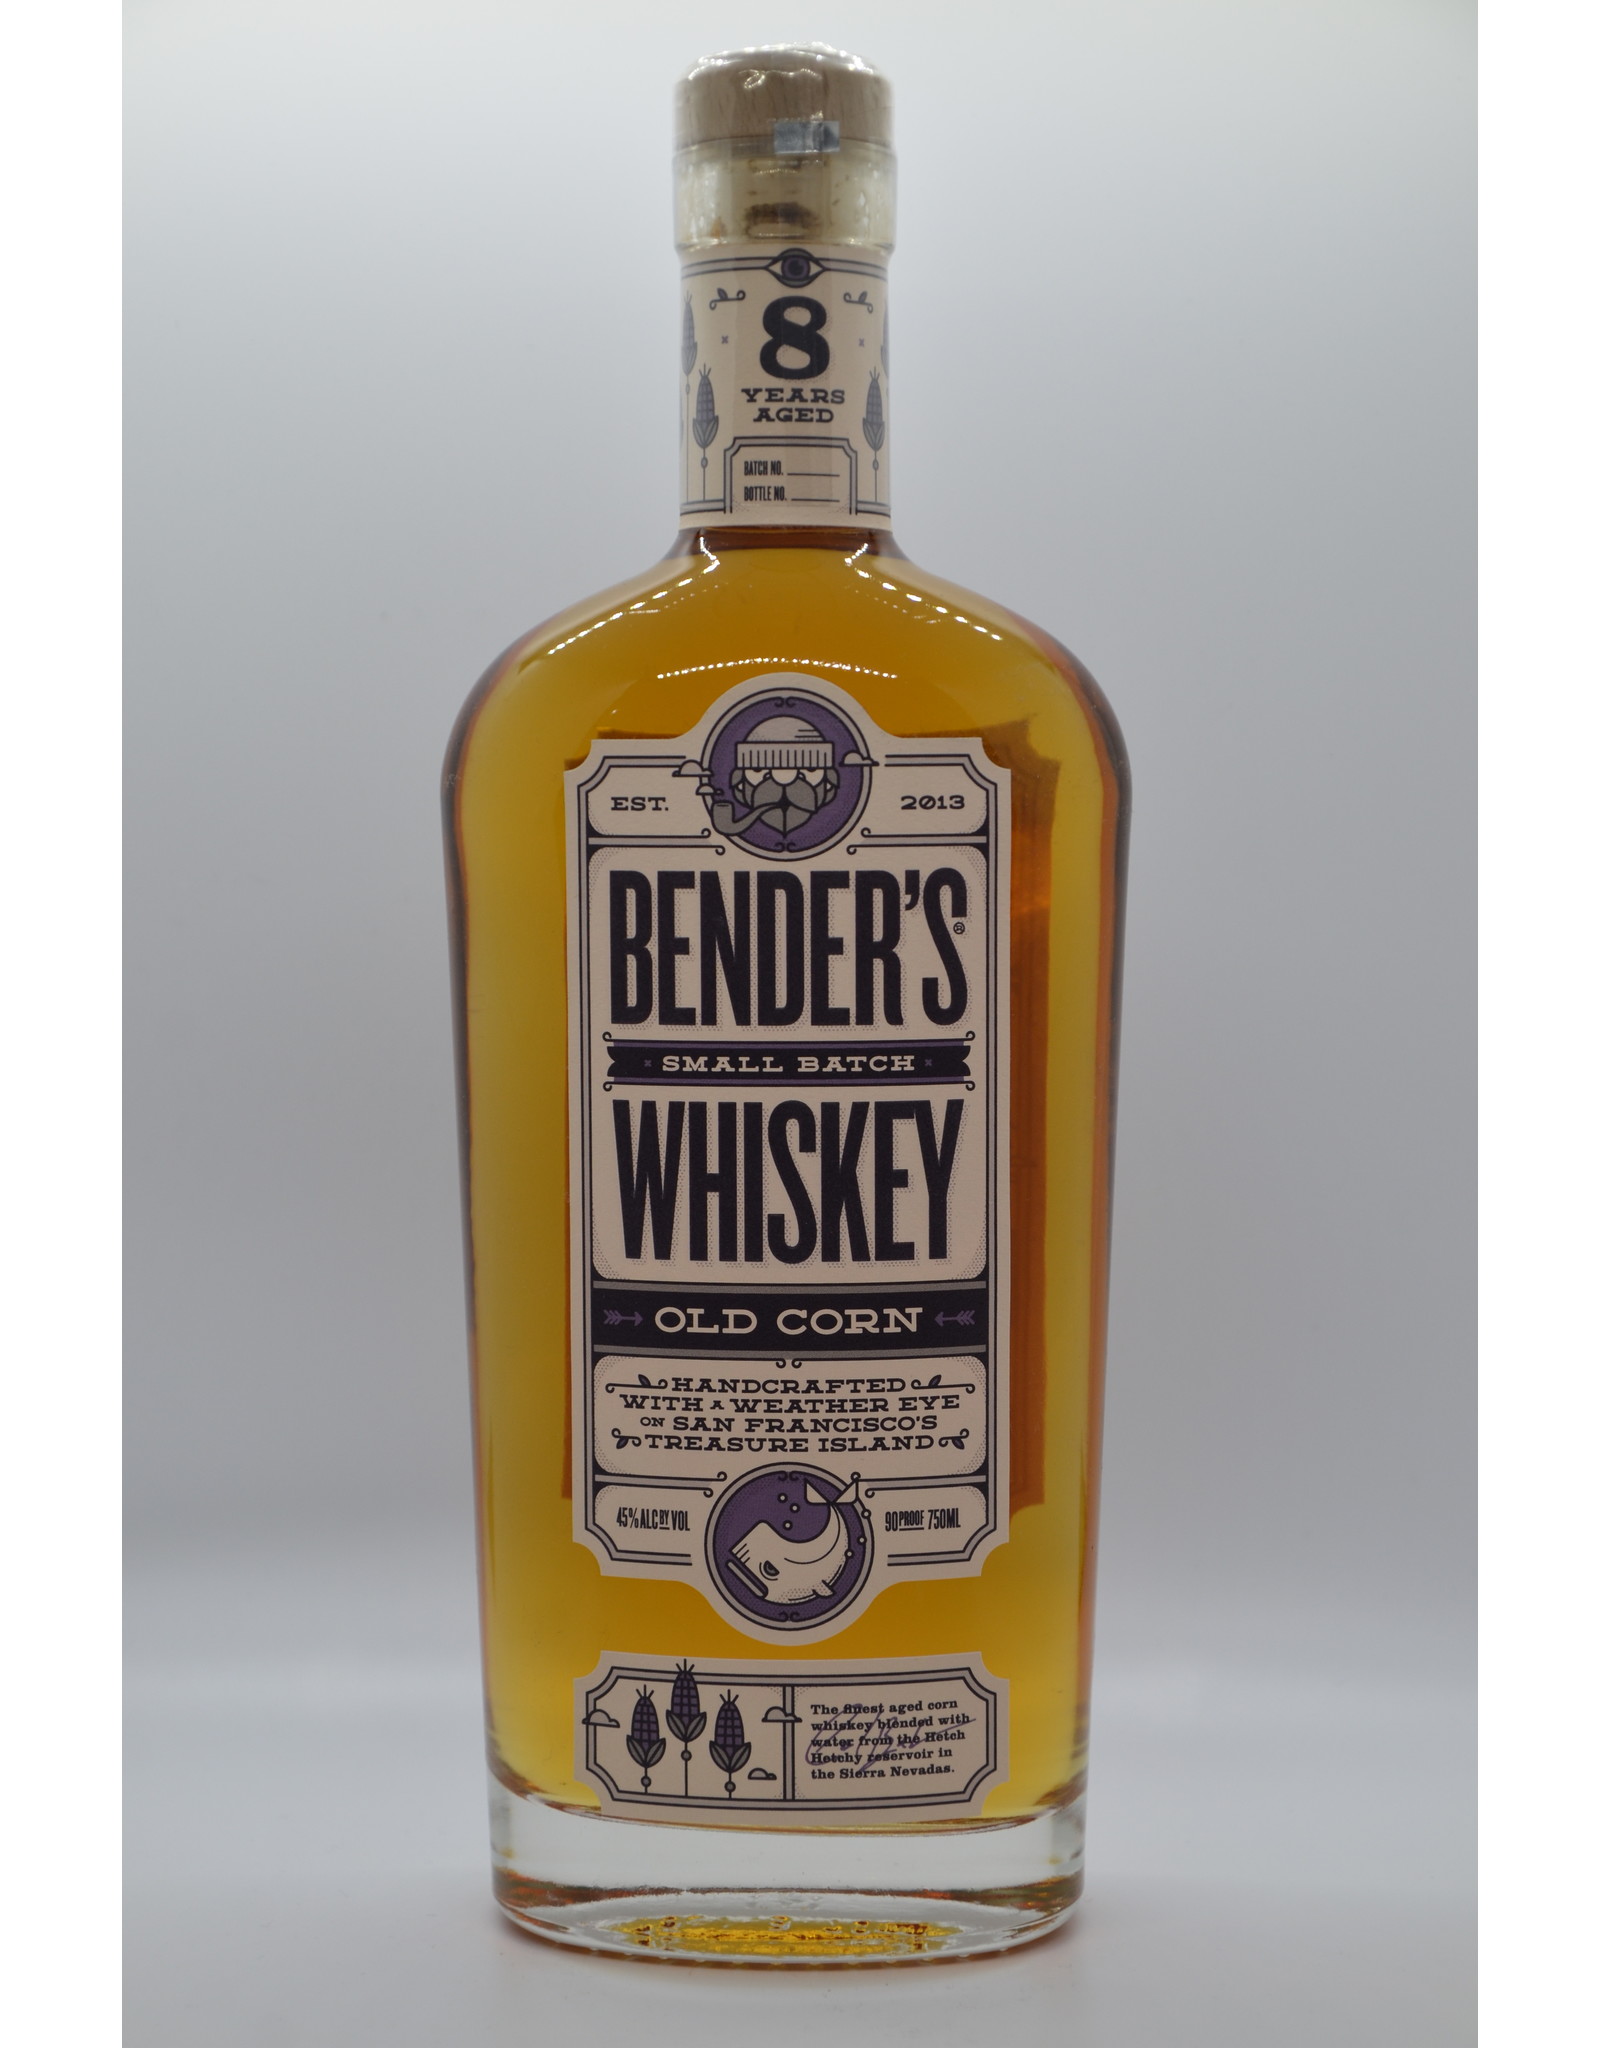 USA Bender's Old Corn Whiskey